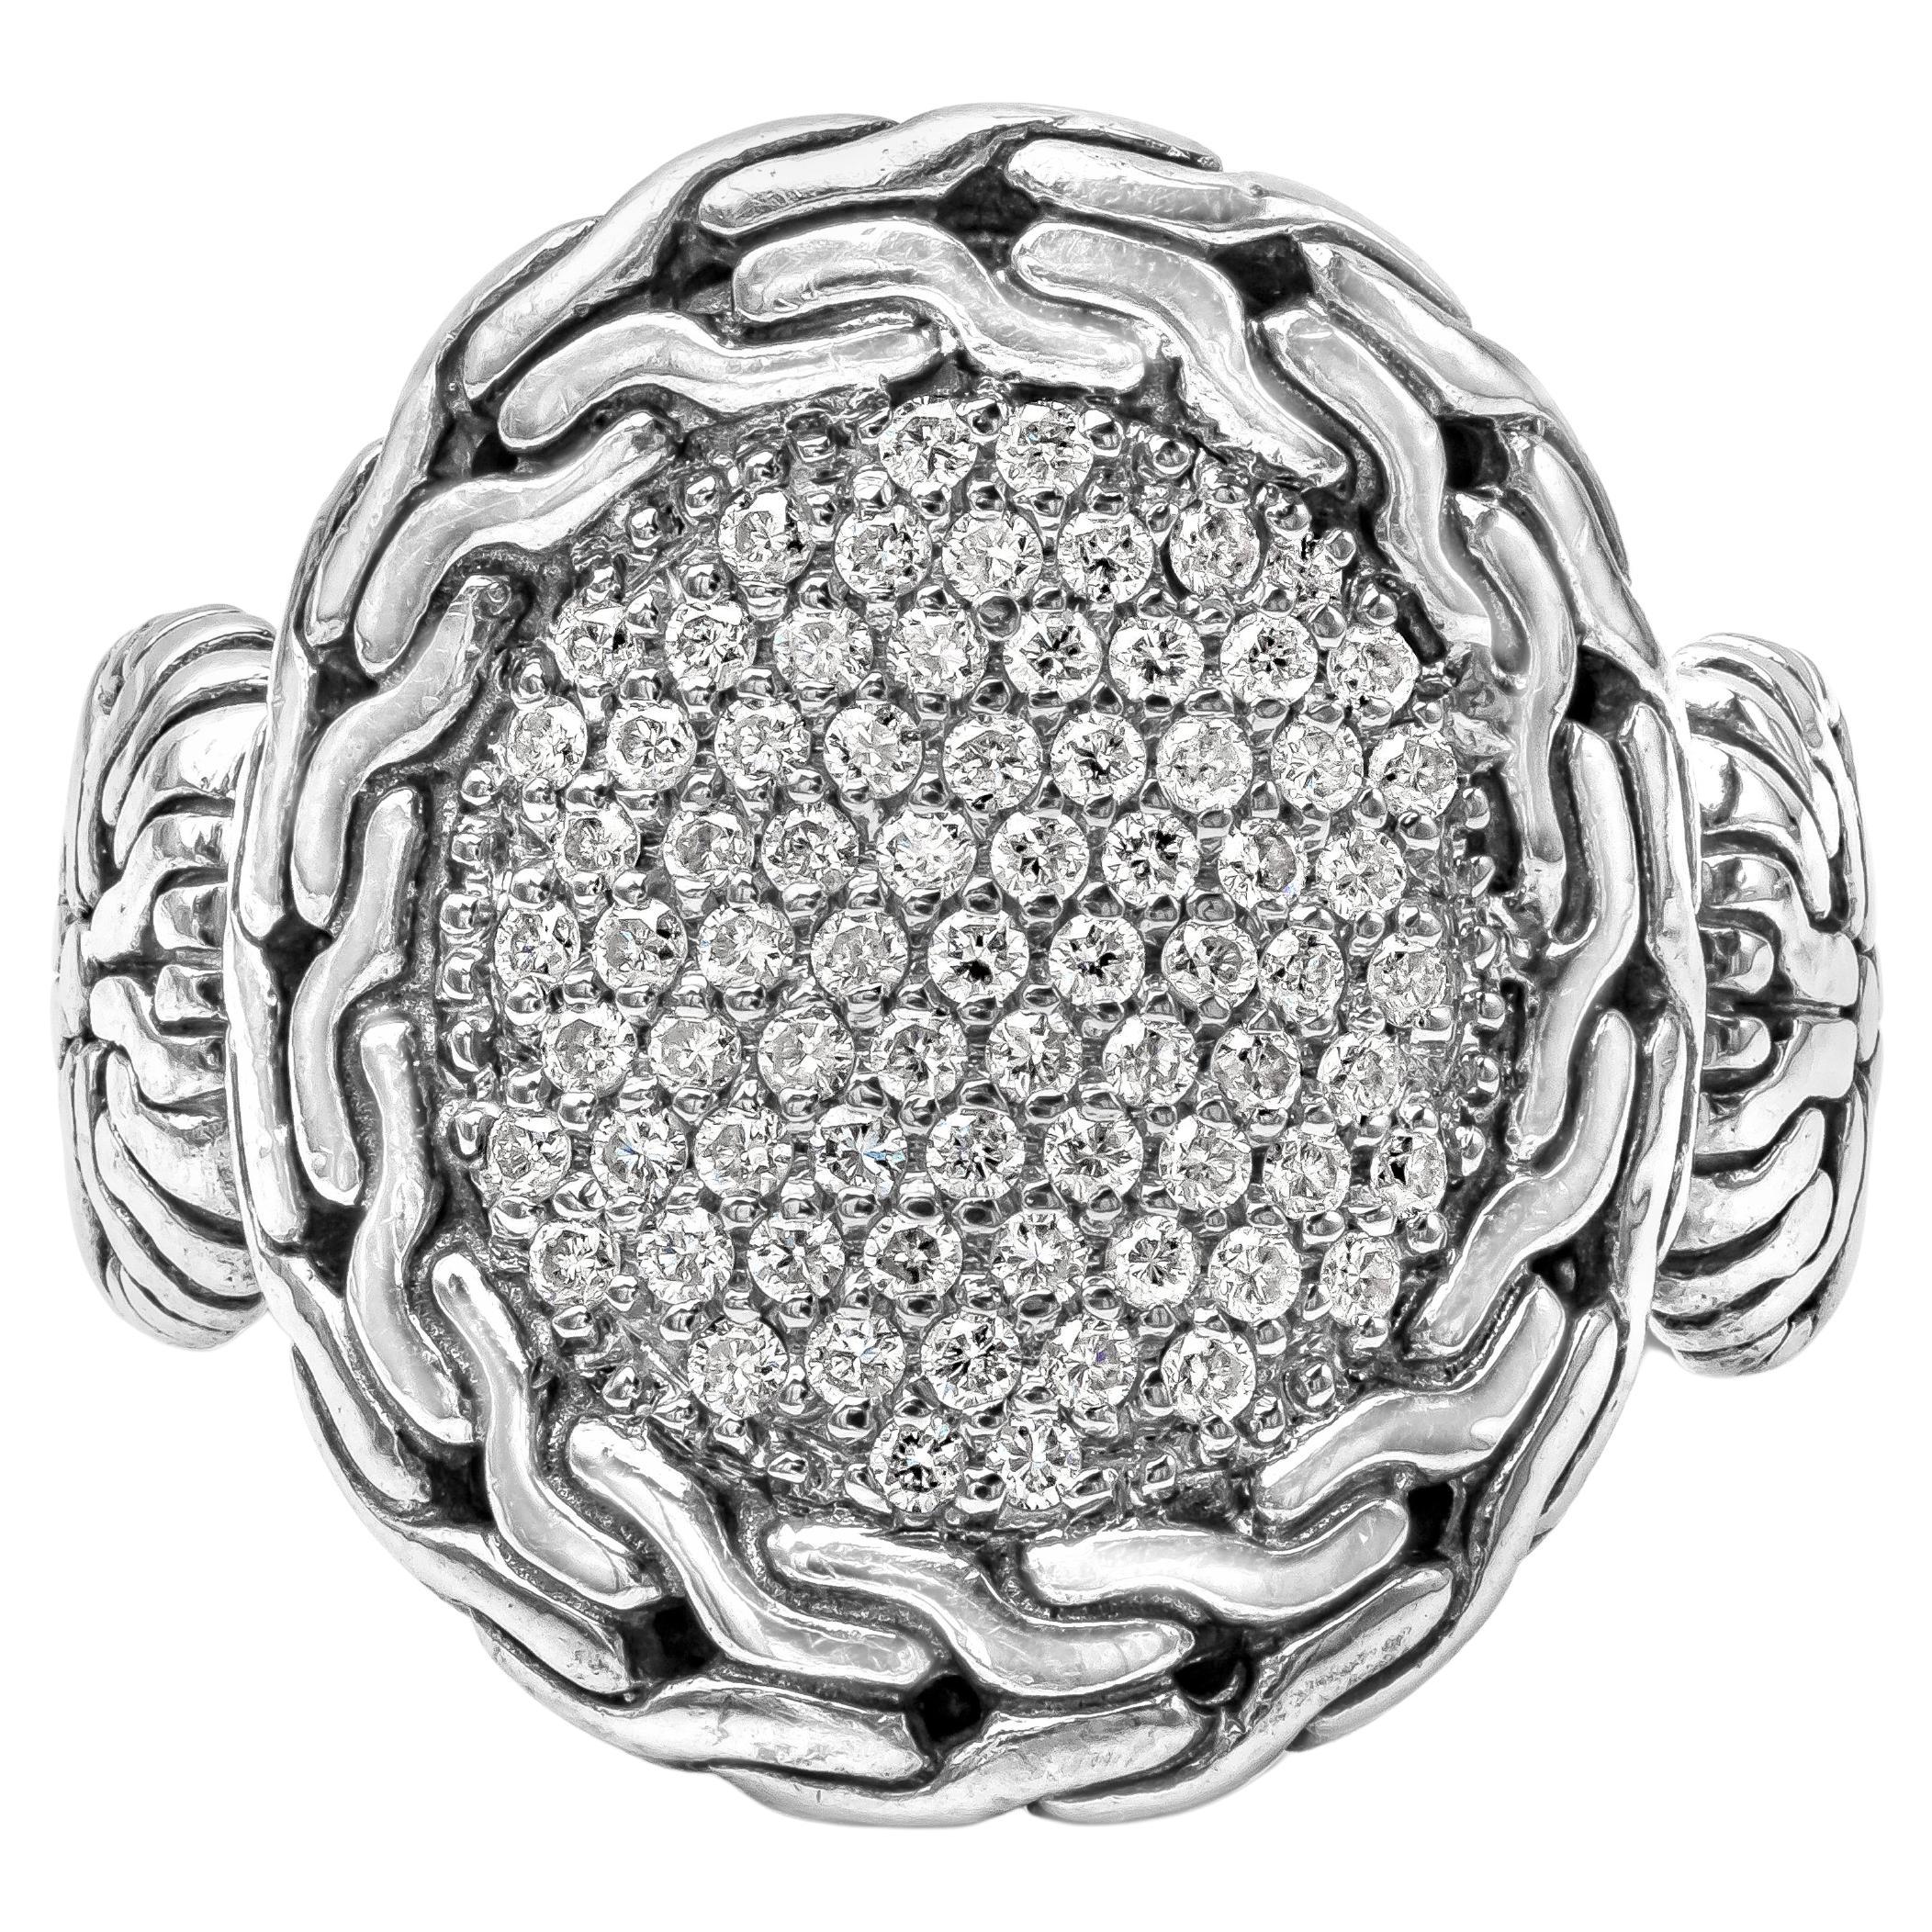 David Yurman 0.37 Carats Total Brilliant Round Cut Diamond Cocktail Fashion Ring For Sale